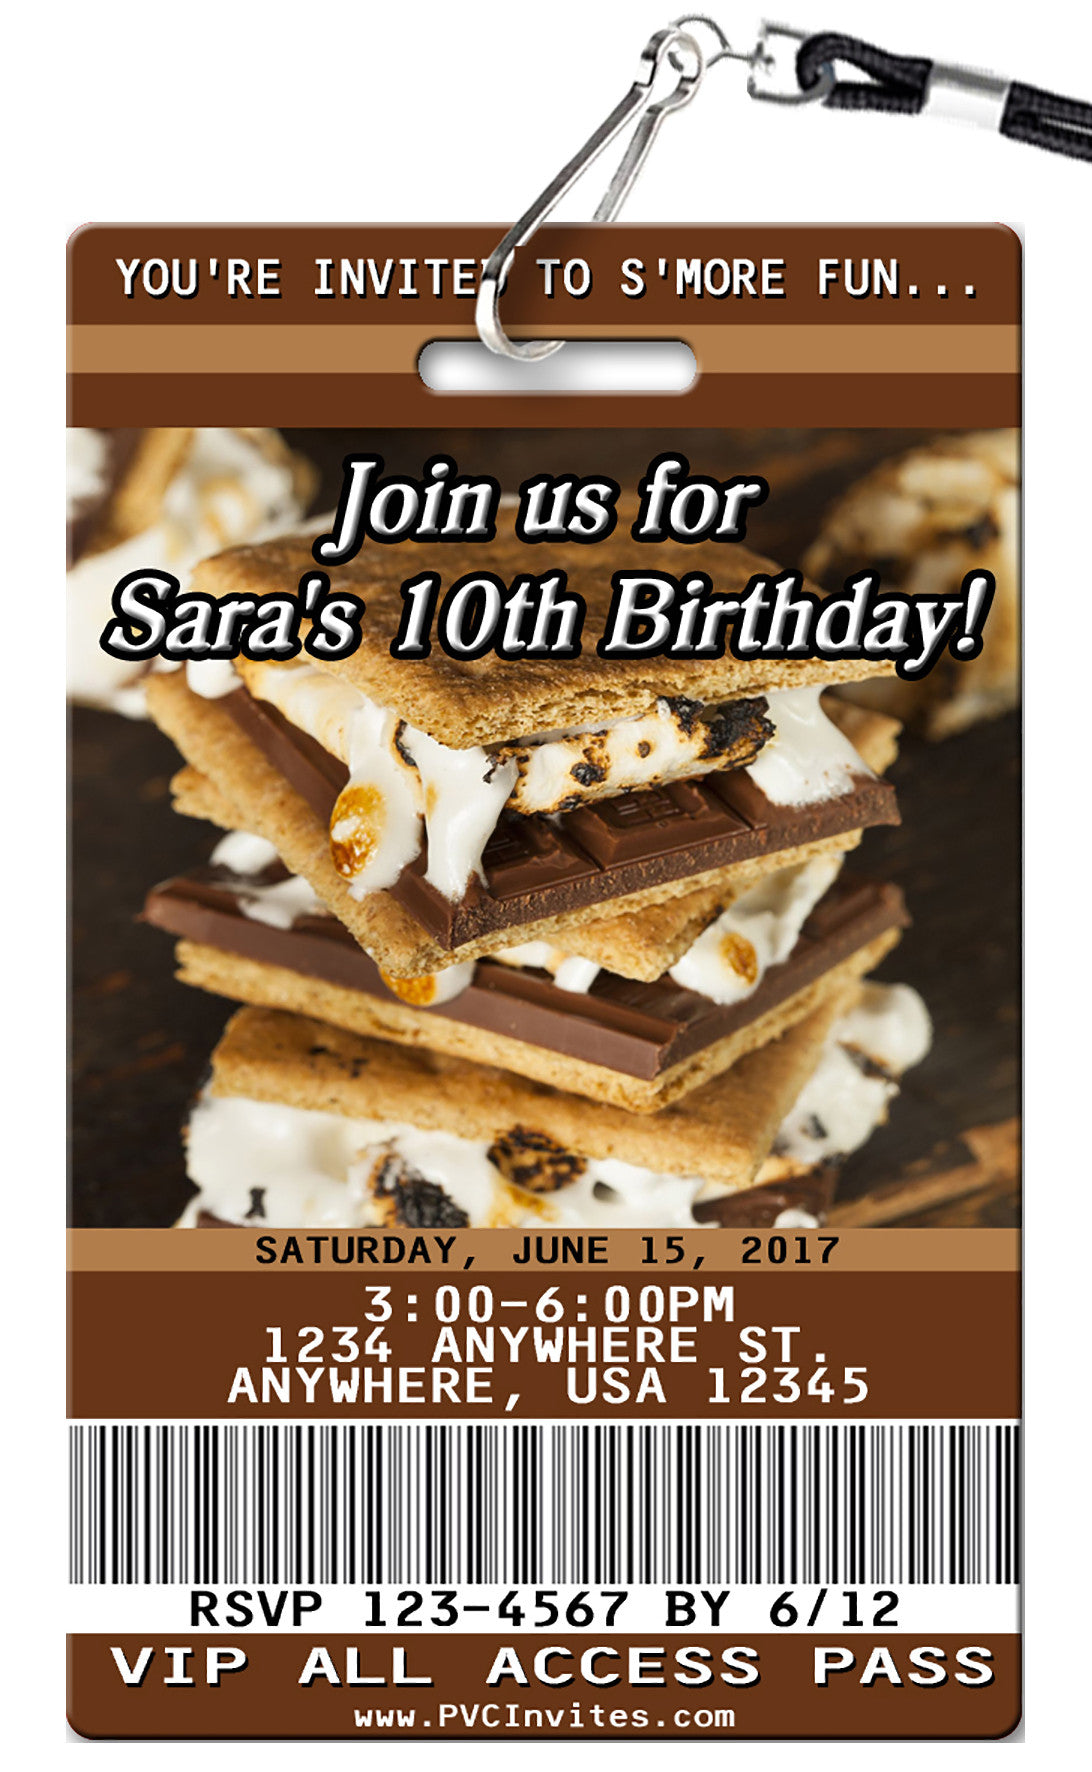 S'mores Birthday Invitation